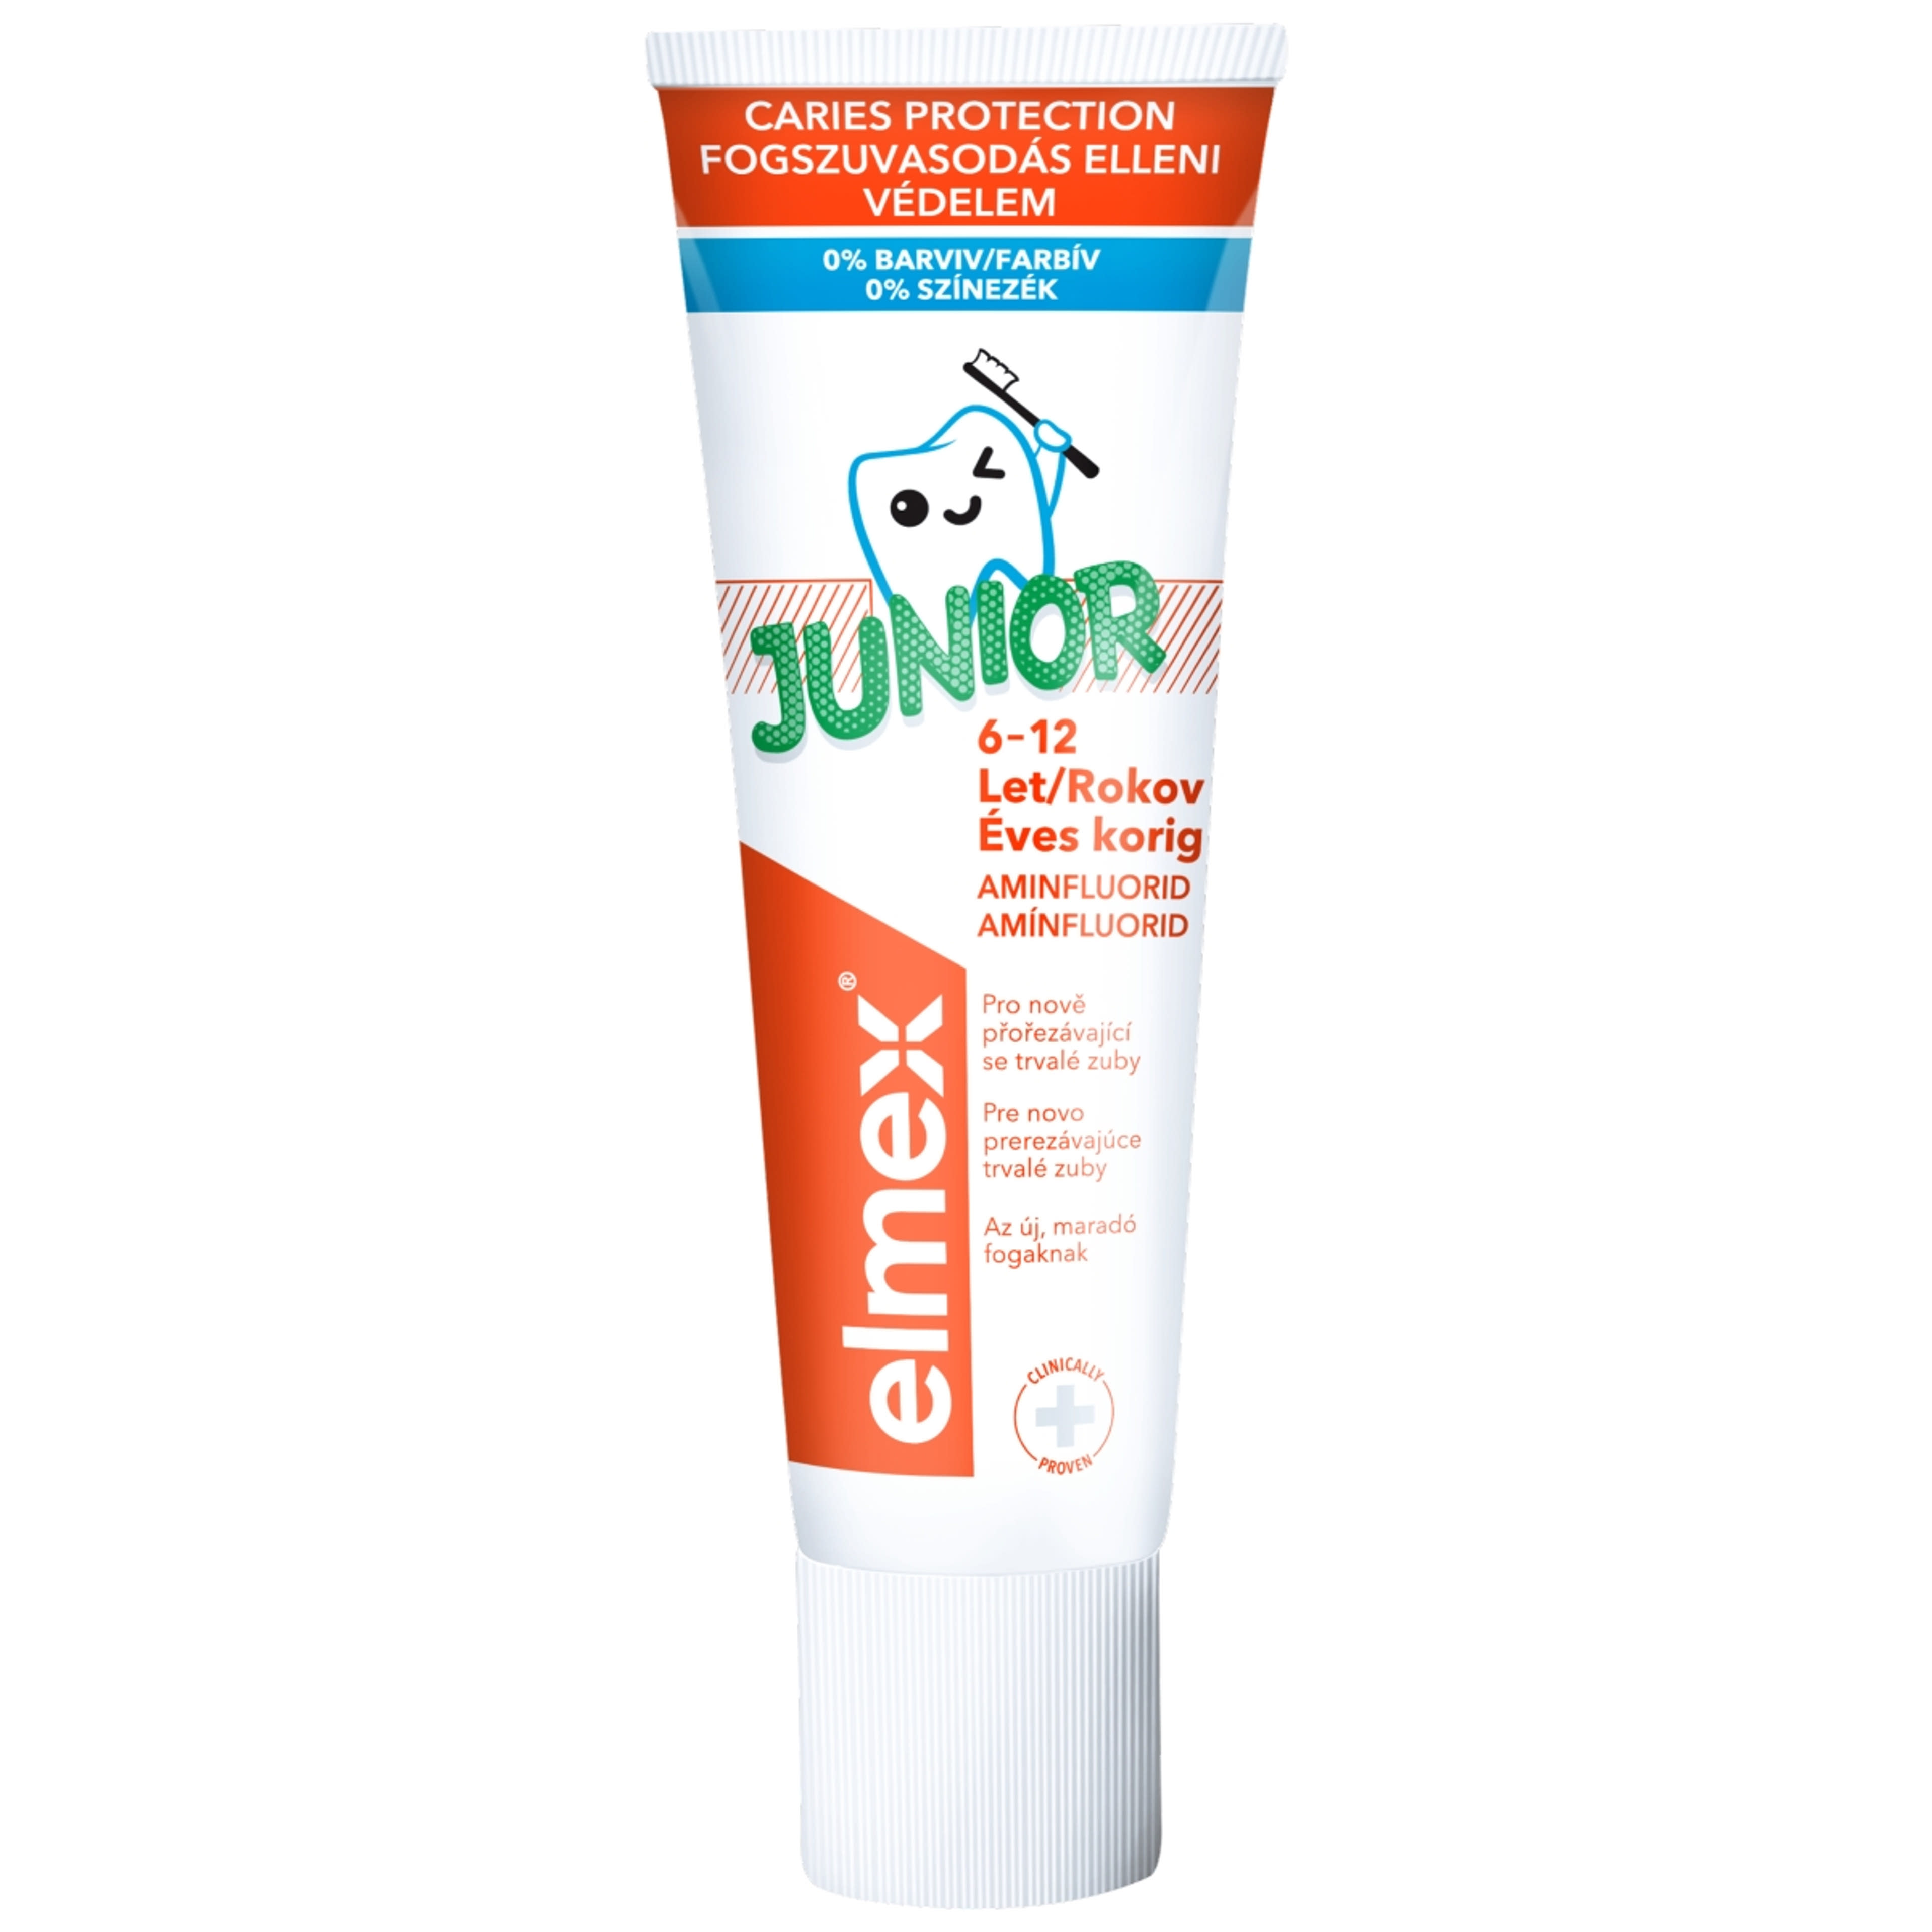 Elmex Junior fluoridos fogkrém 6-12 éves korig - 75 ml-2